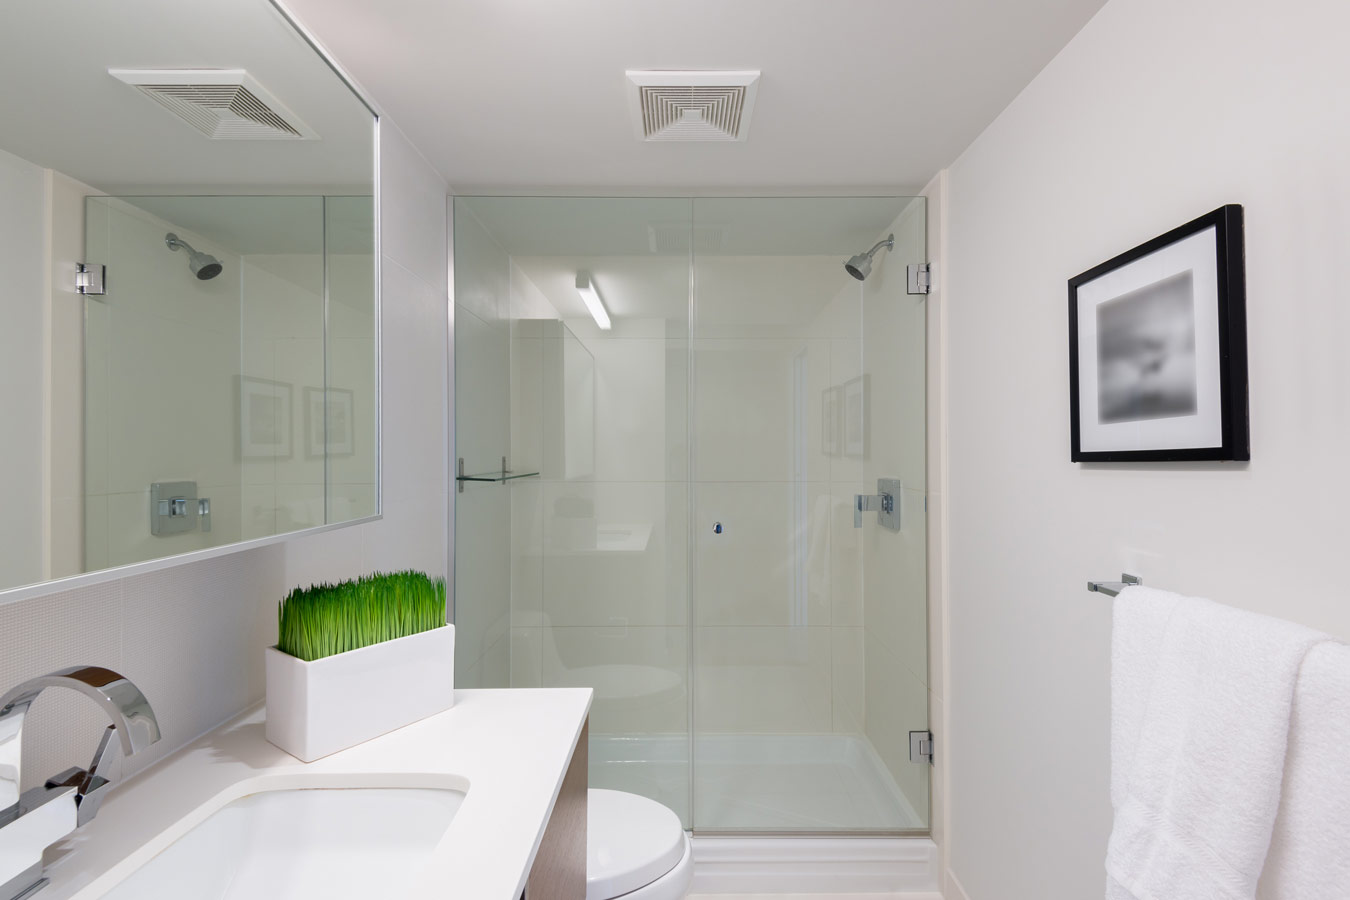 Gesloten douche met glazen douchewanden - kleine badkamer